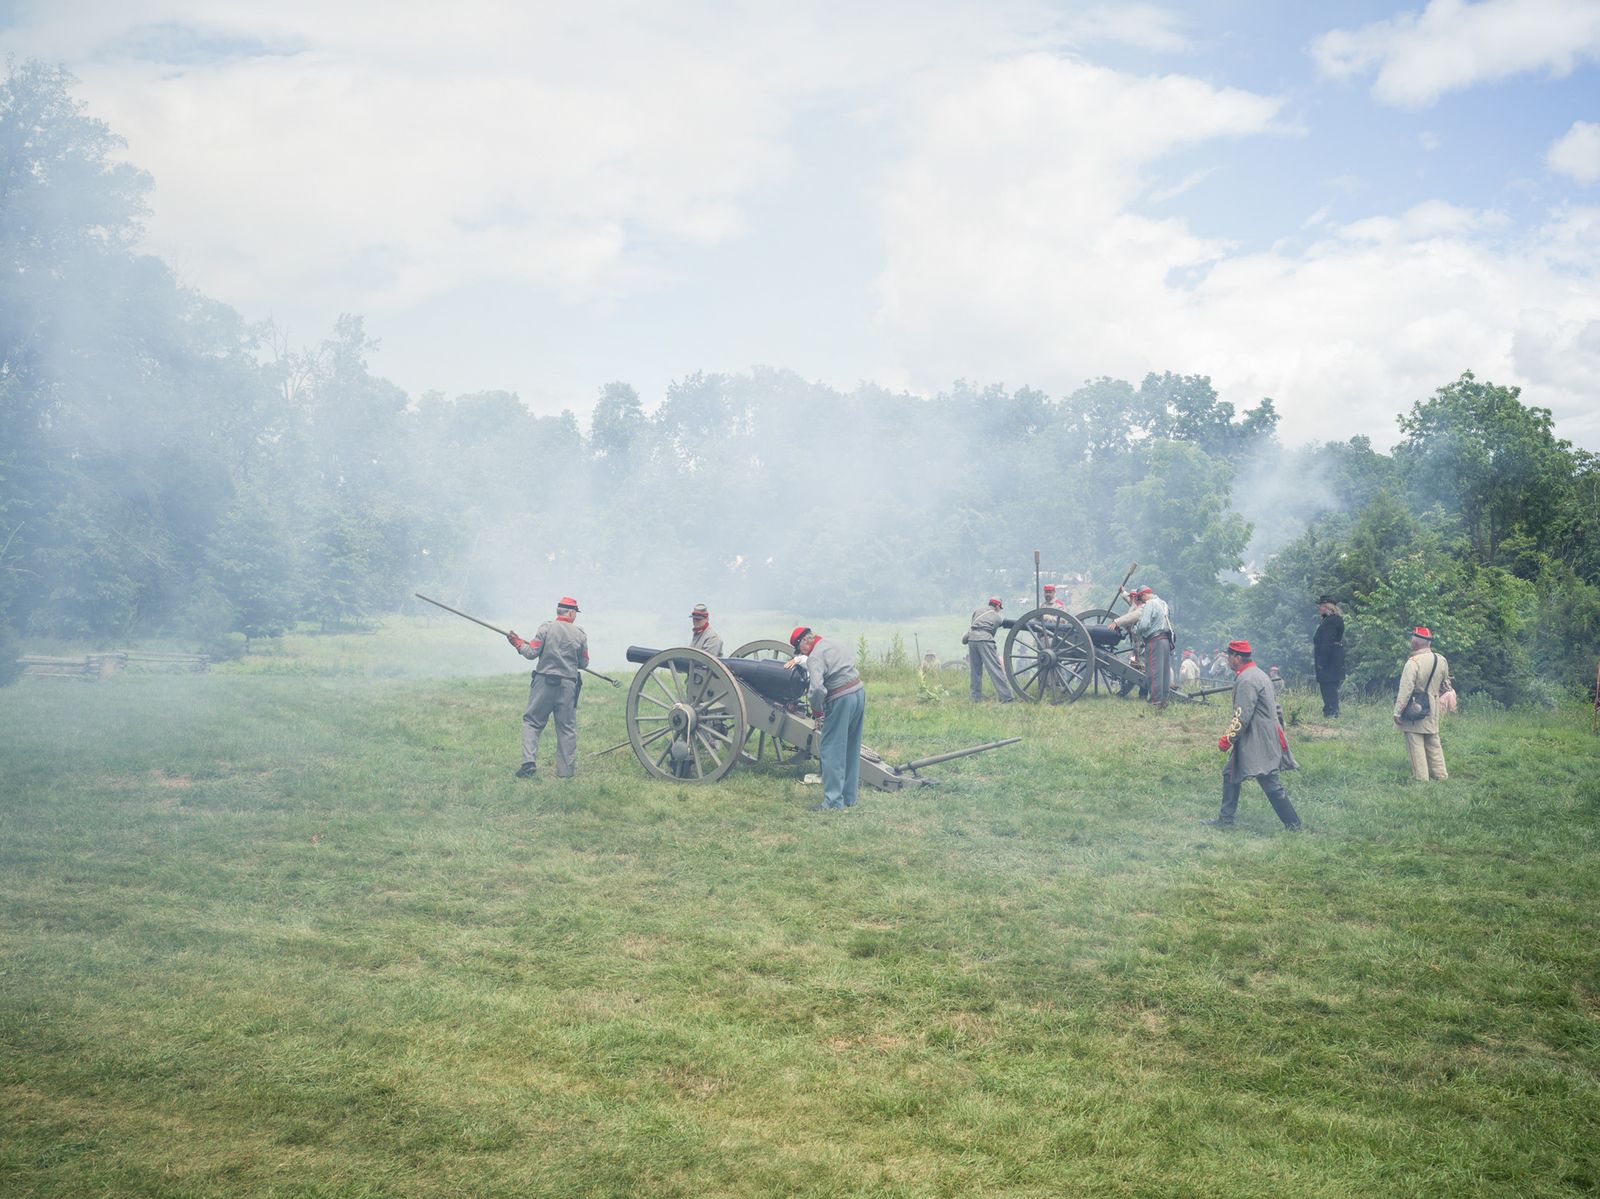 © Orejarena & Stein - Orejarena & Stein. Confederates at Gettysburg Reenactment. 2021.